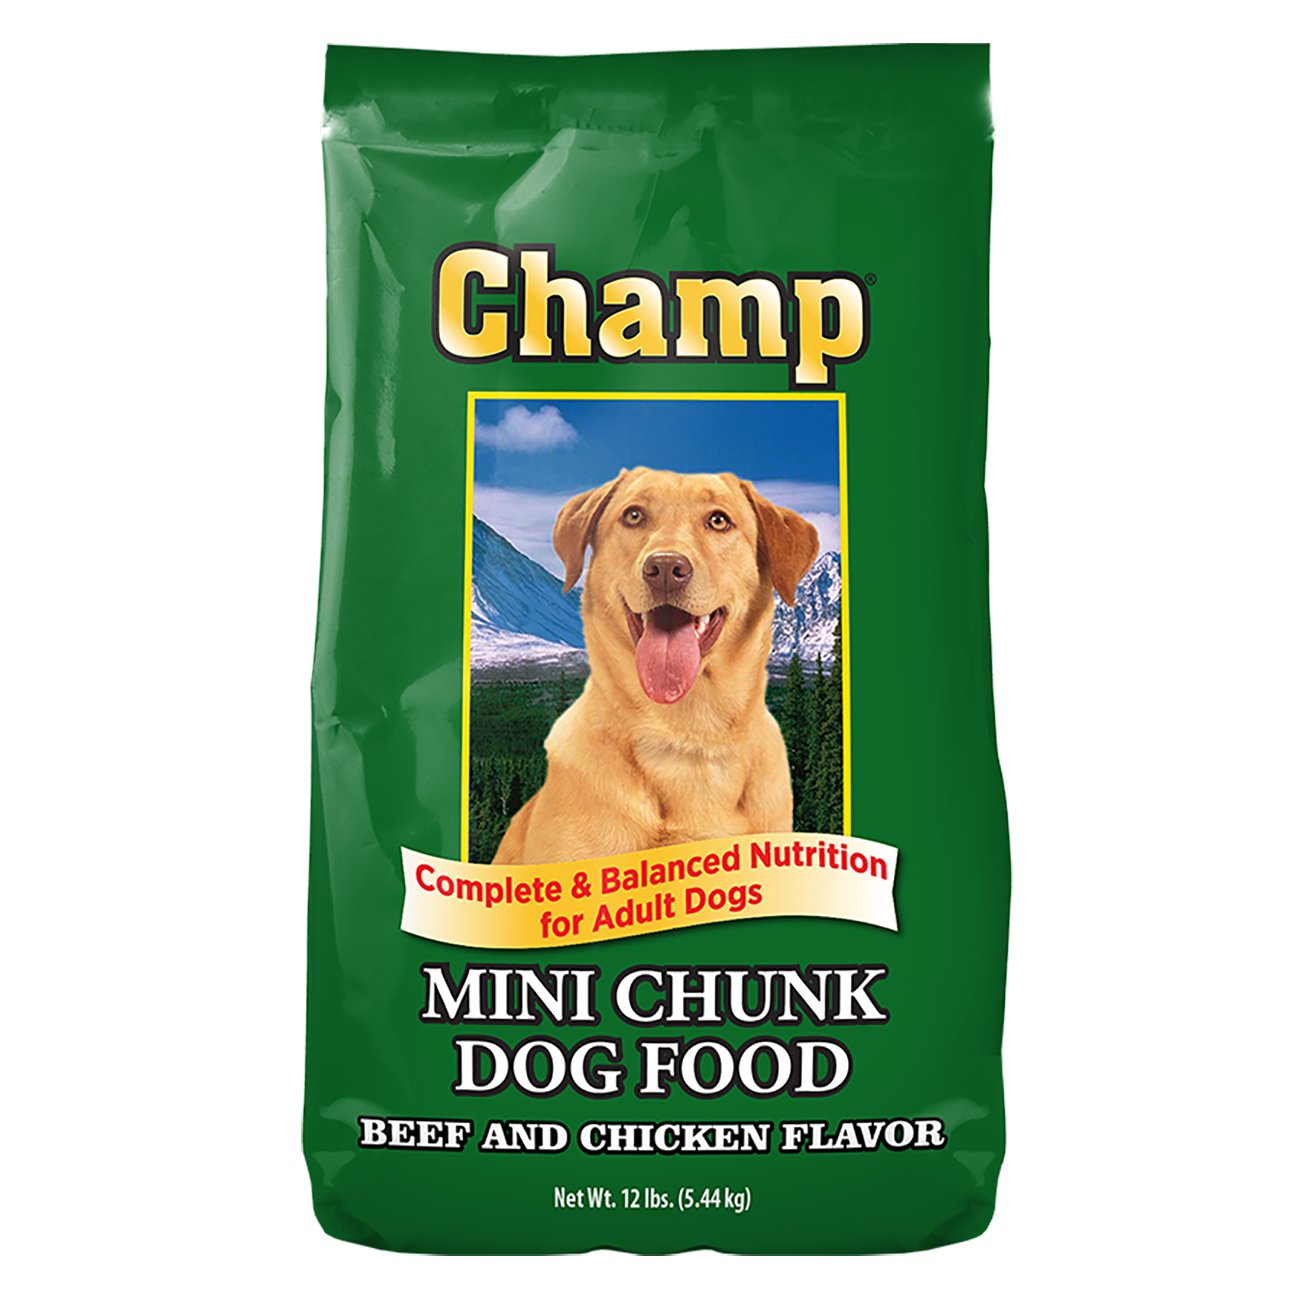 Mini Chunk Dry Dog Food - Dogs at H-E-B